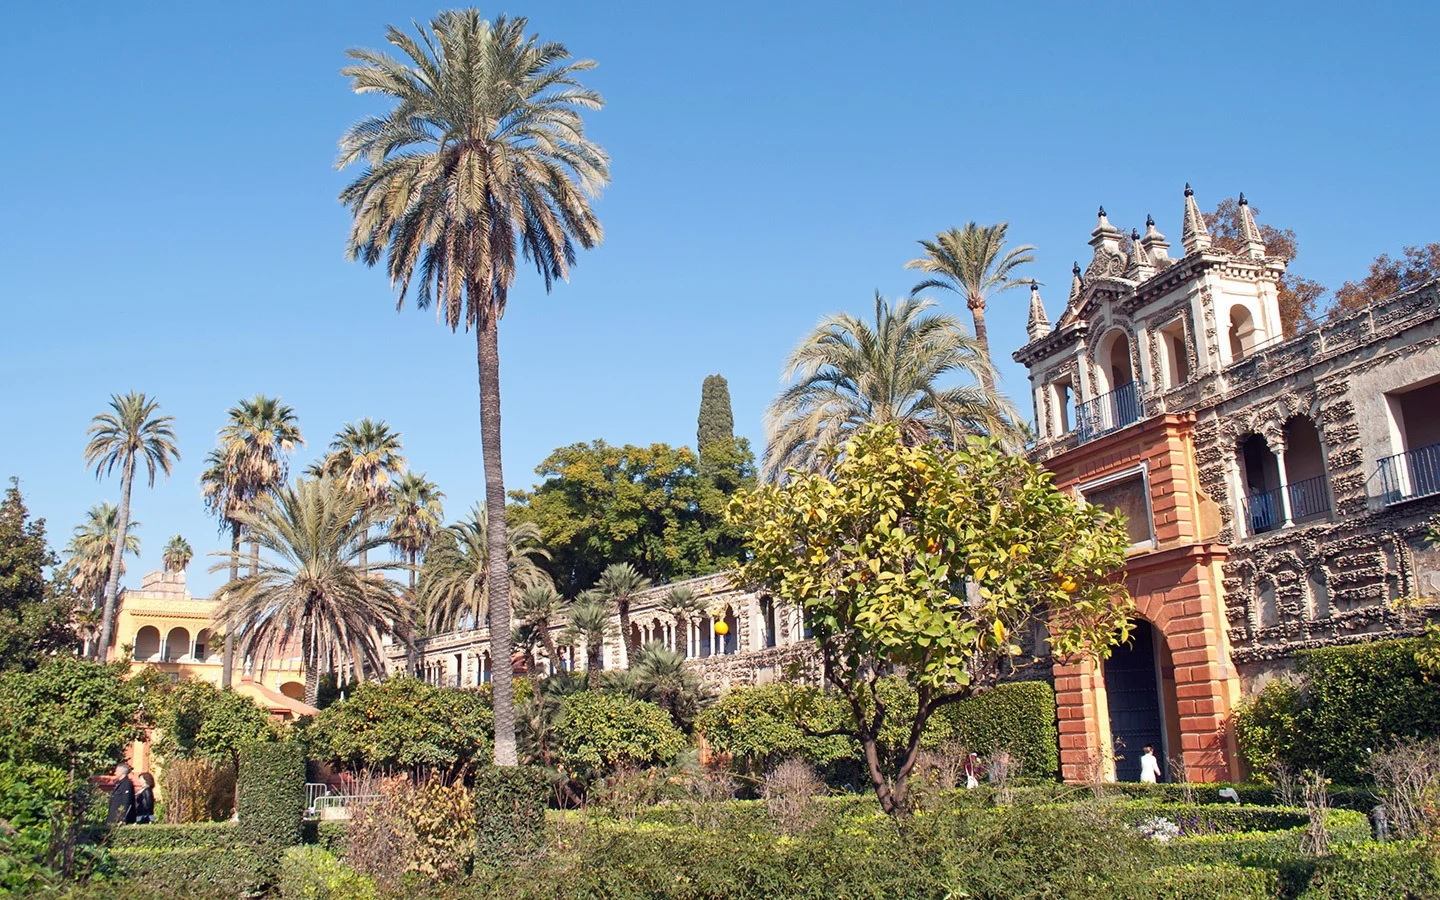 Gardens at the Real Alcazar, Seville